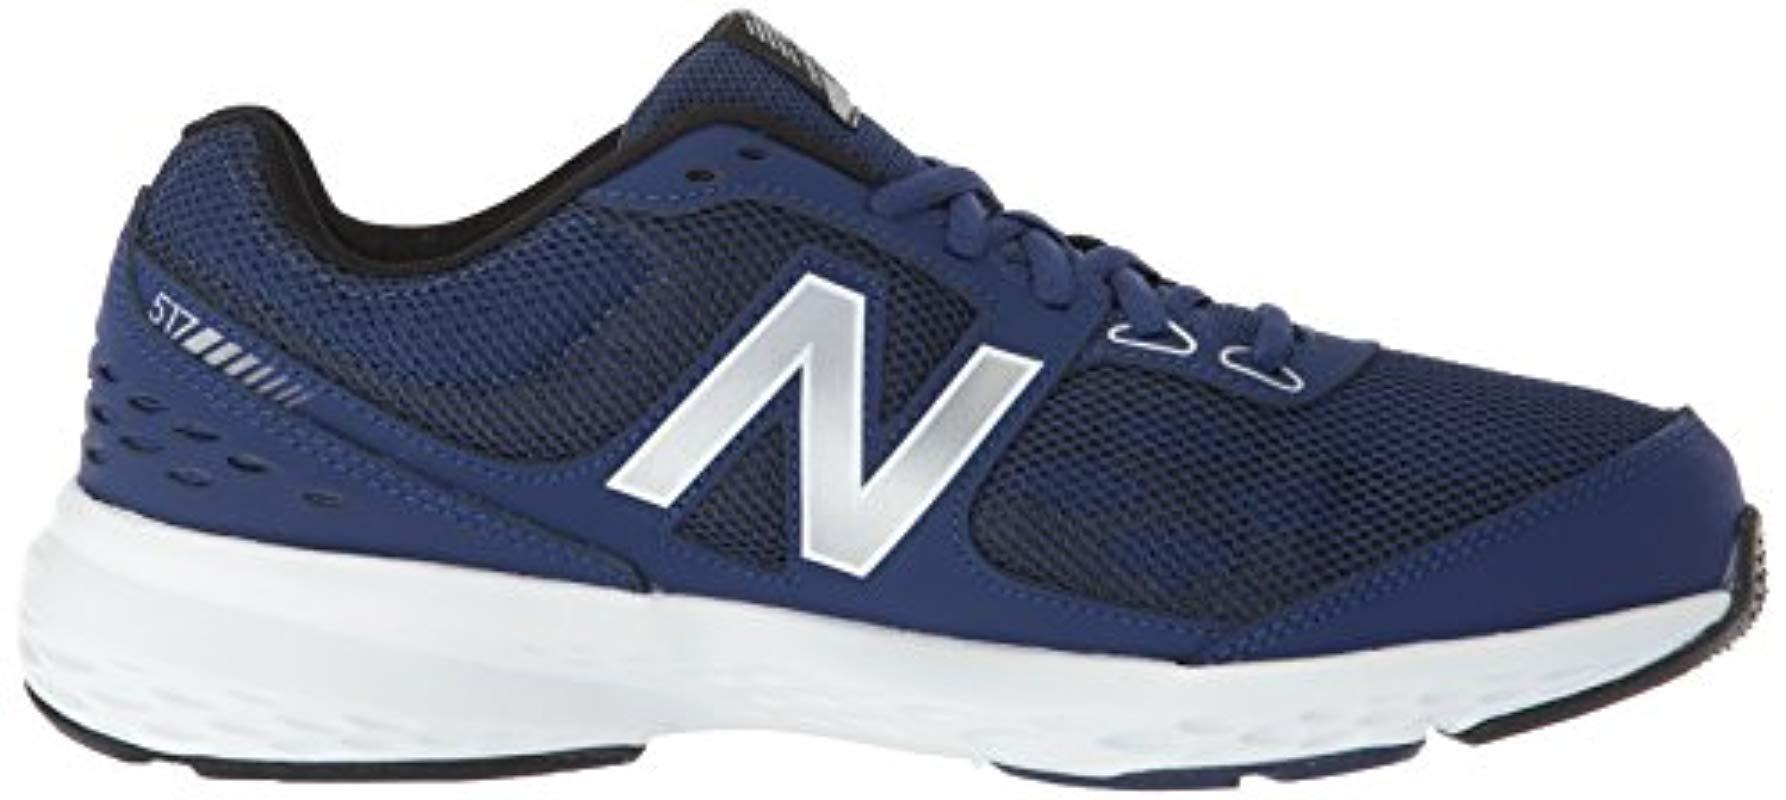 new balance men's mx517v1 training shoe